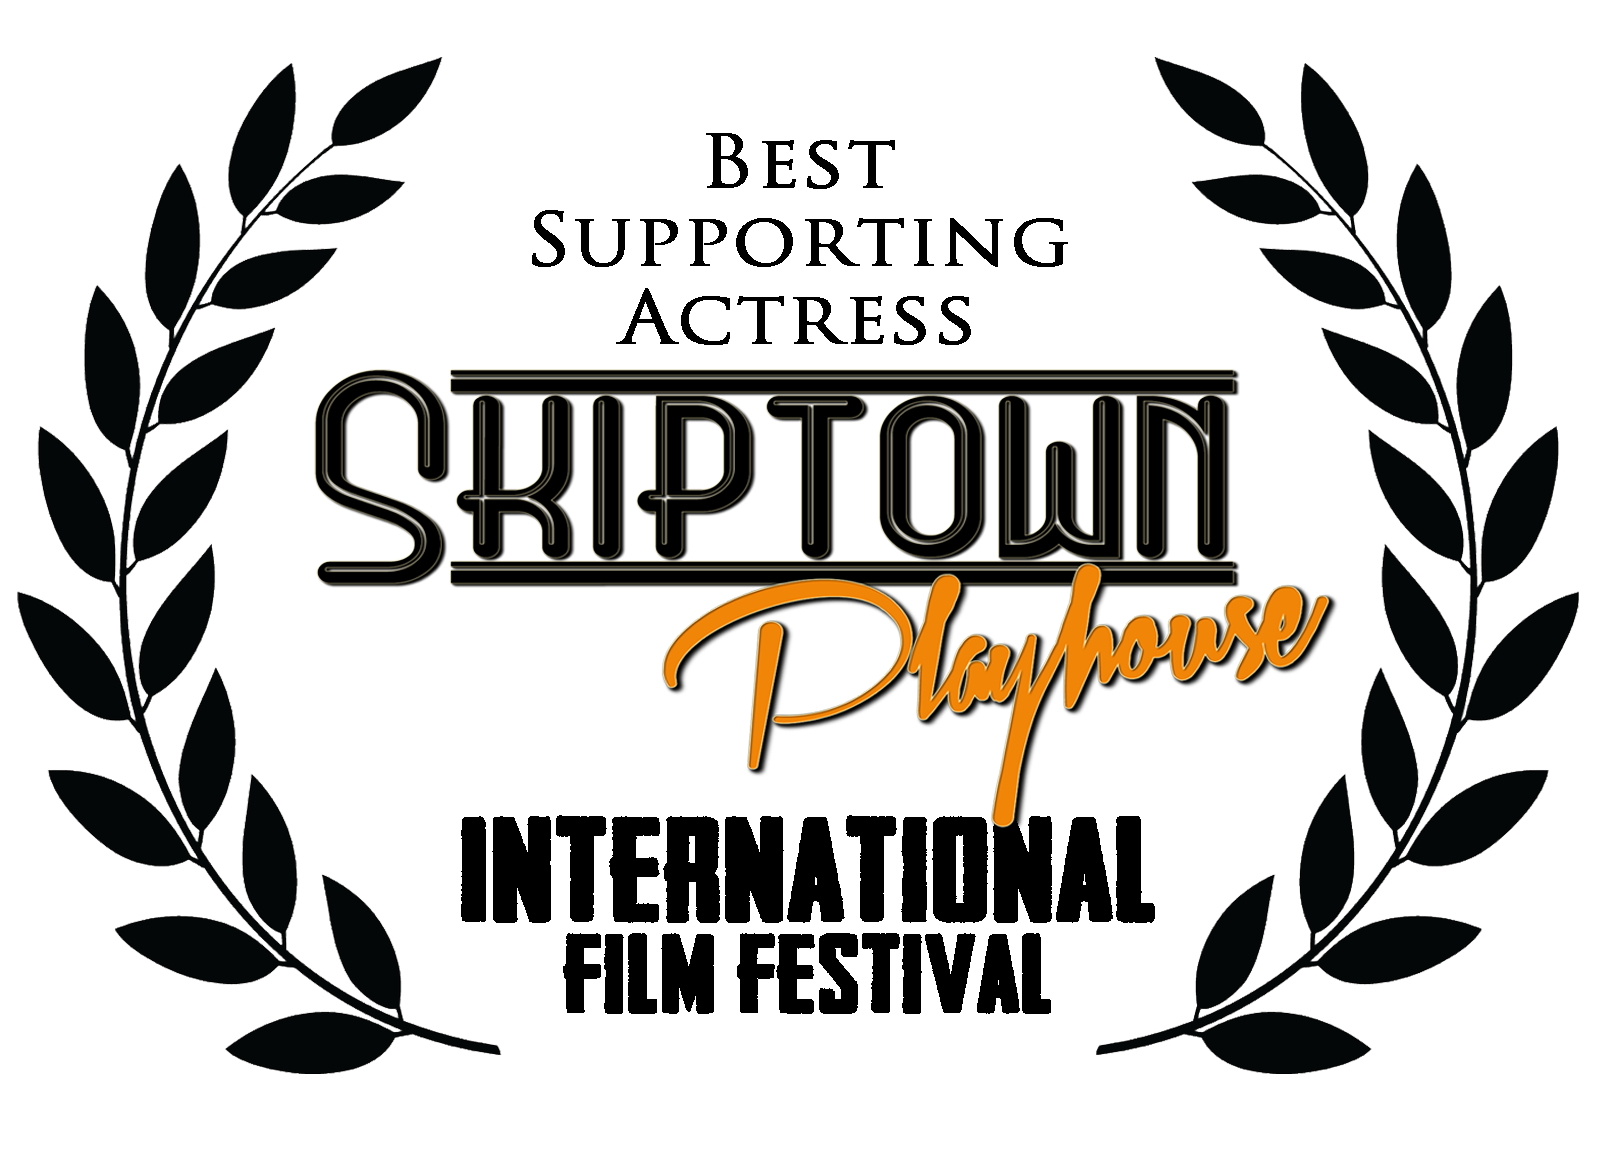 Skiptown Playhouse International Film Festival